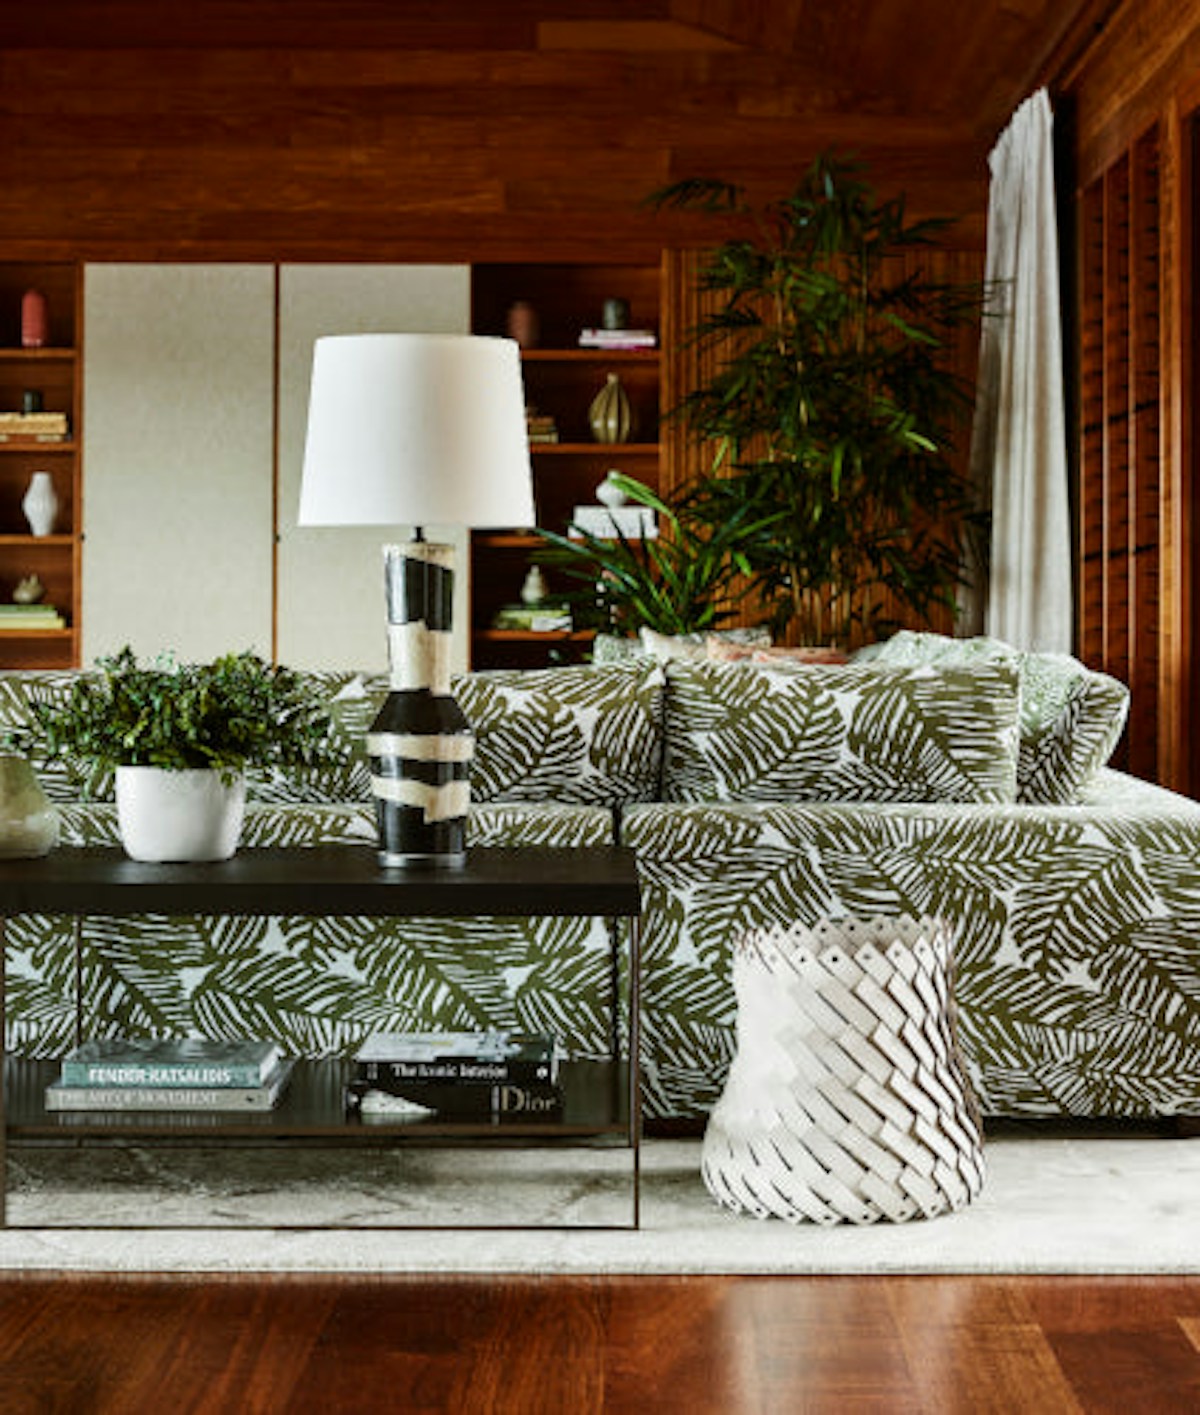 Summer Interior Design Trends - Nature Inspired Furniture & Decor - Greg Natale - LuxDeco.com Style Guide